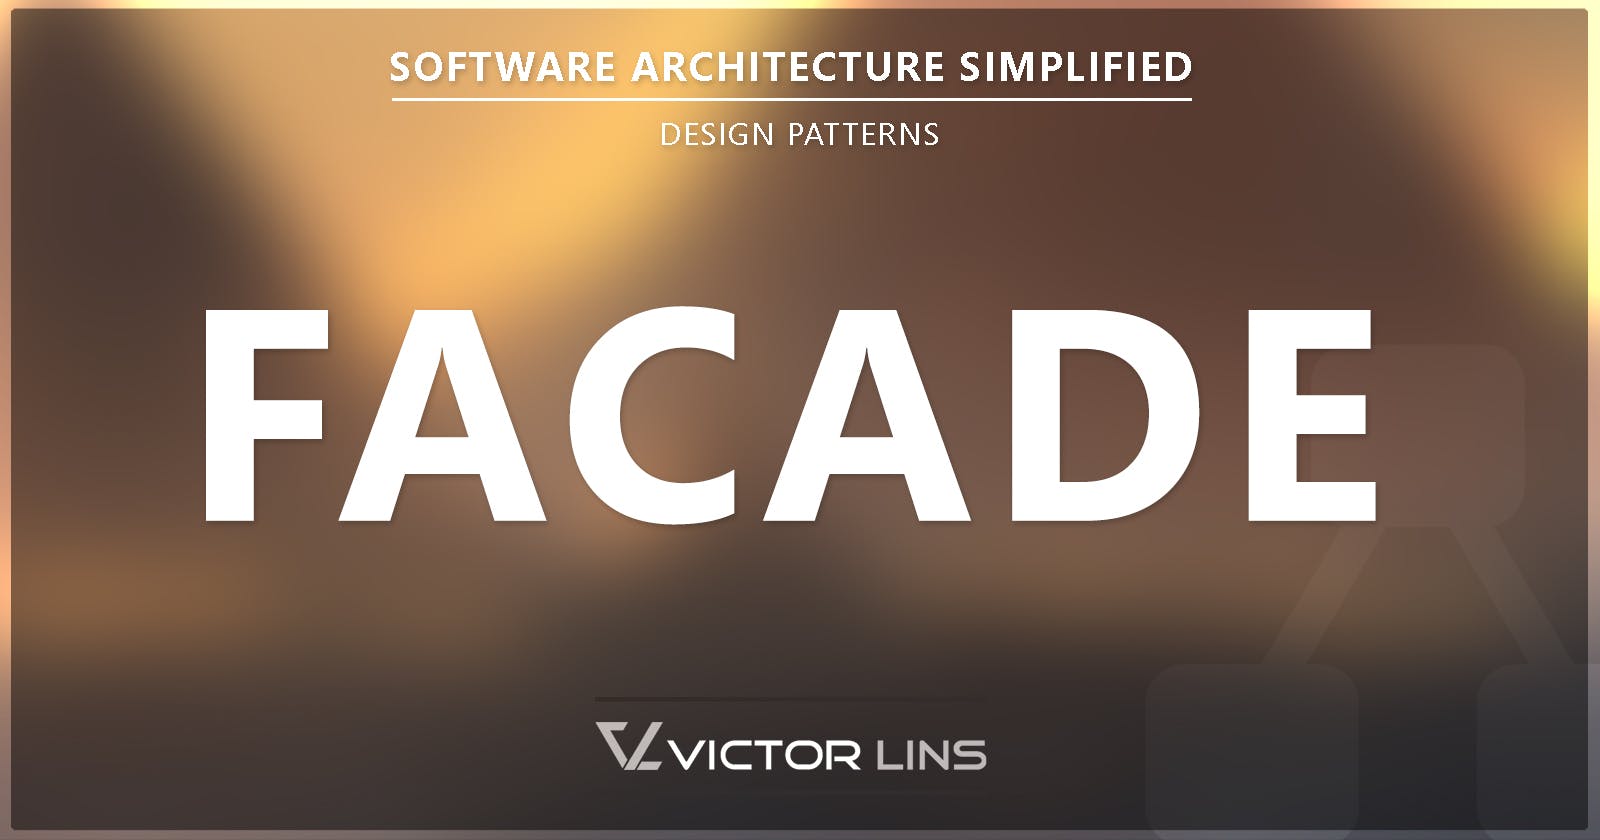 Facade - Design Pattern